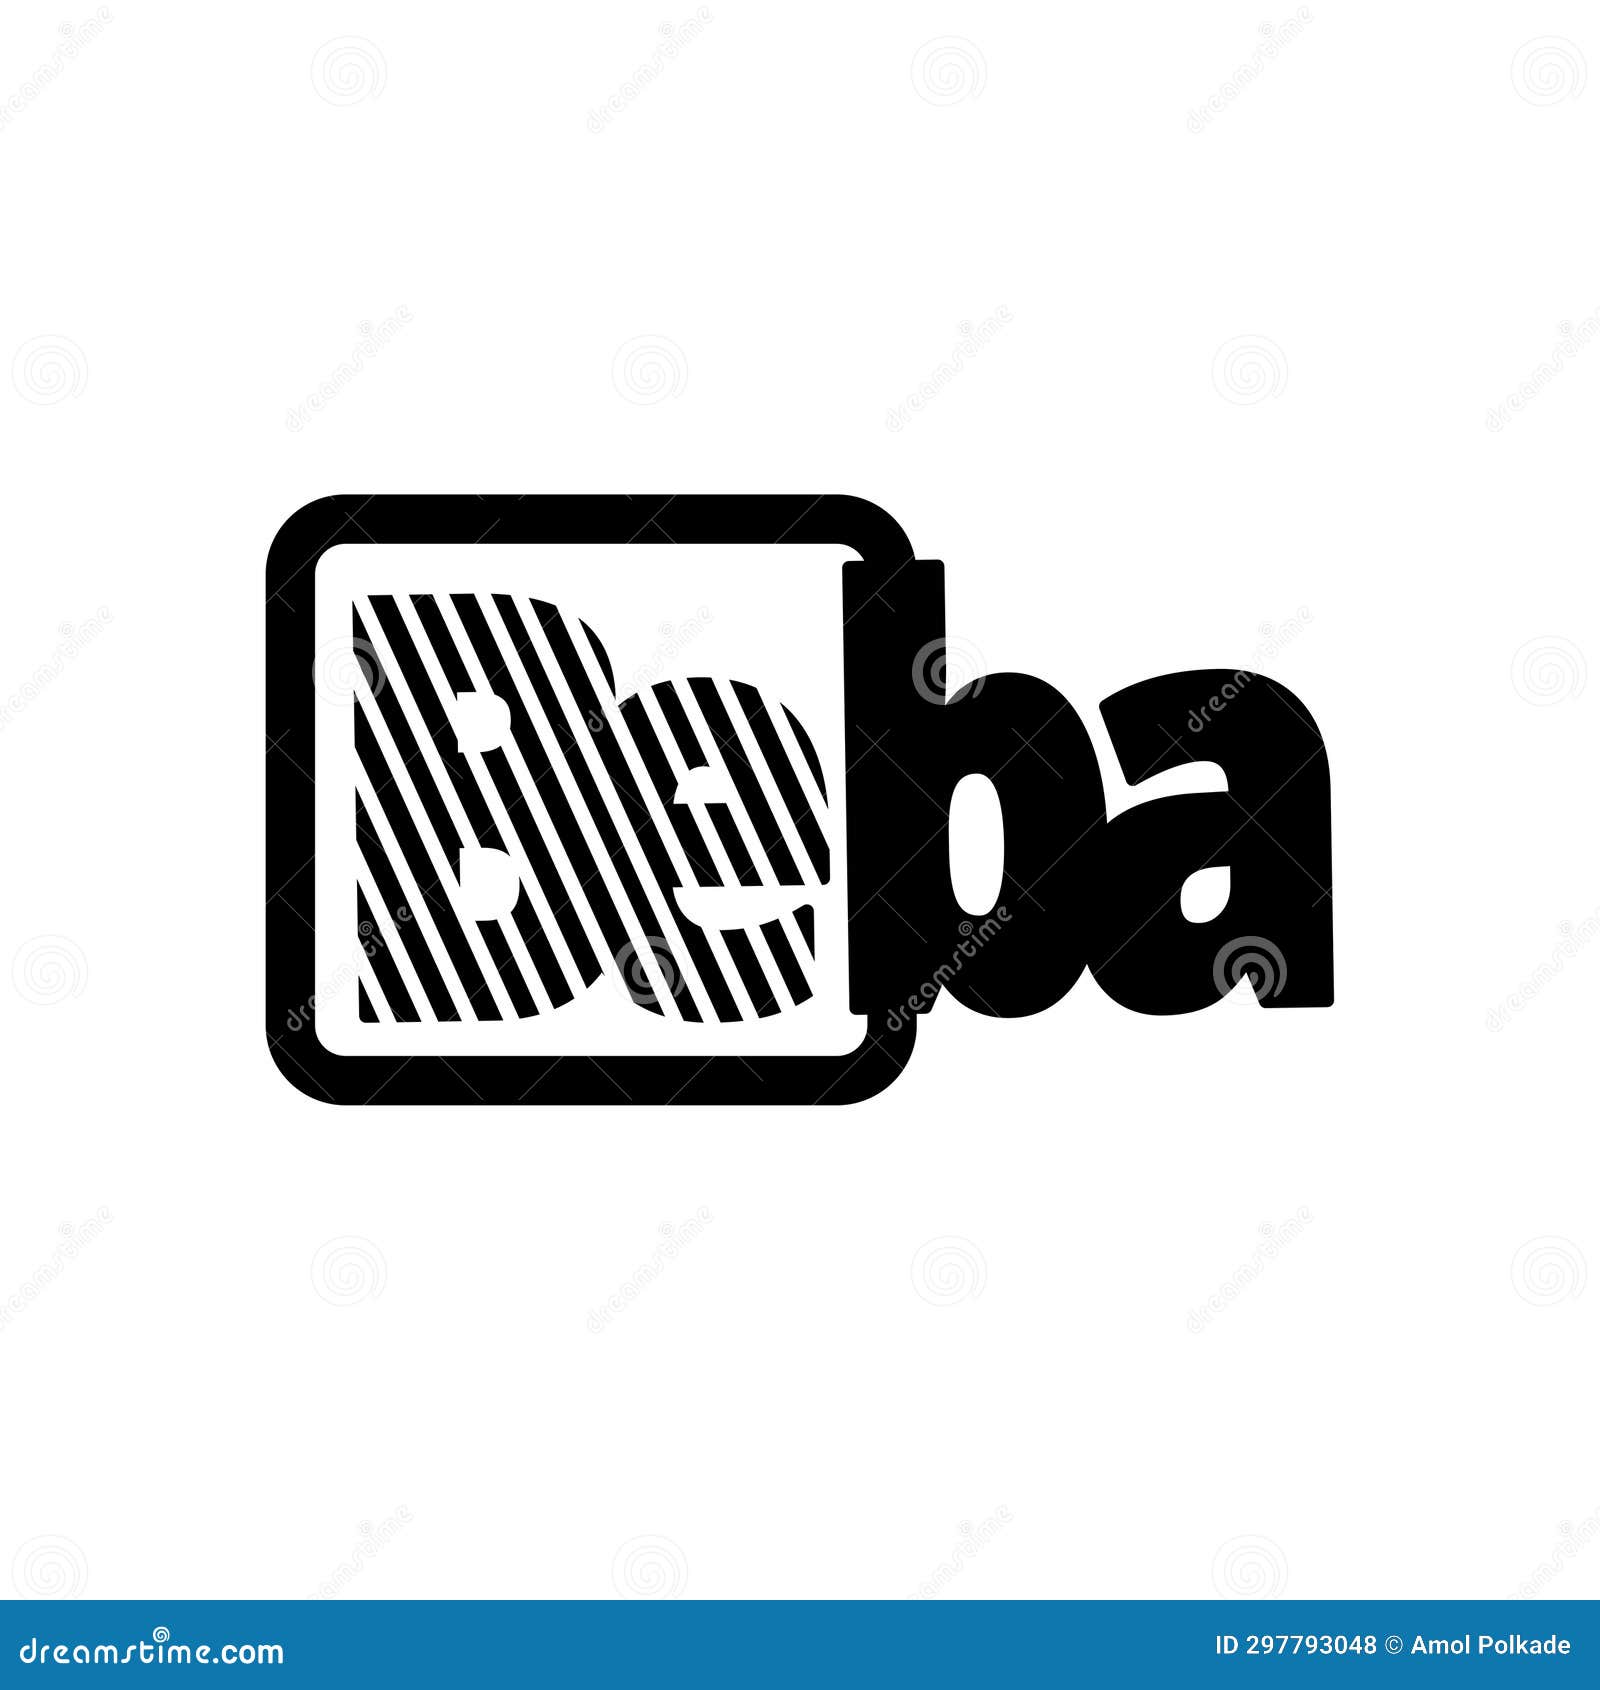 beba brand name initial letter monogram